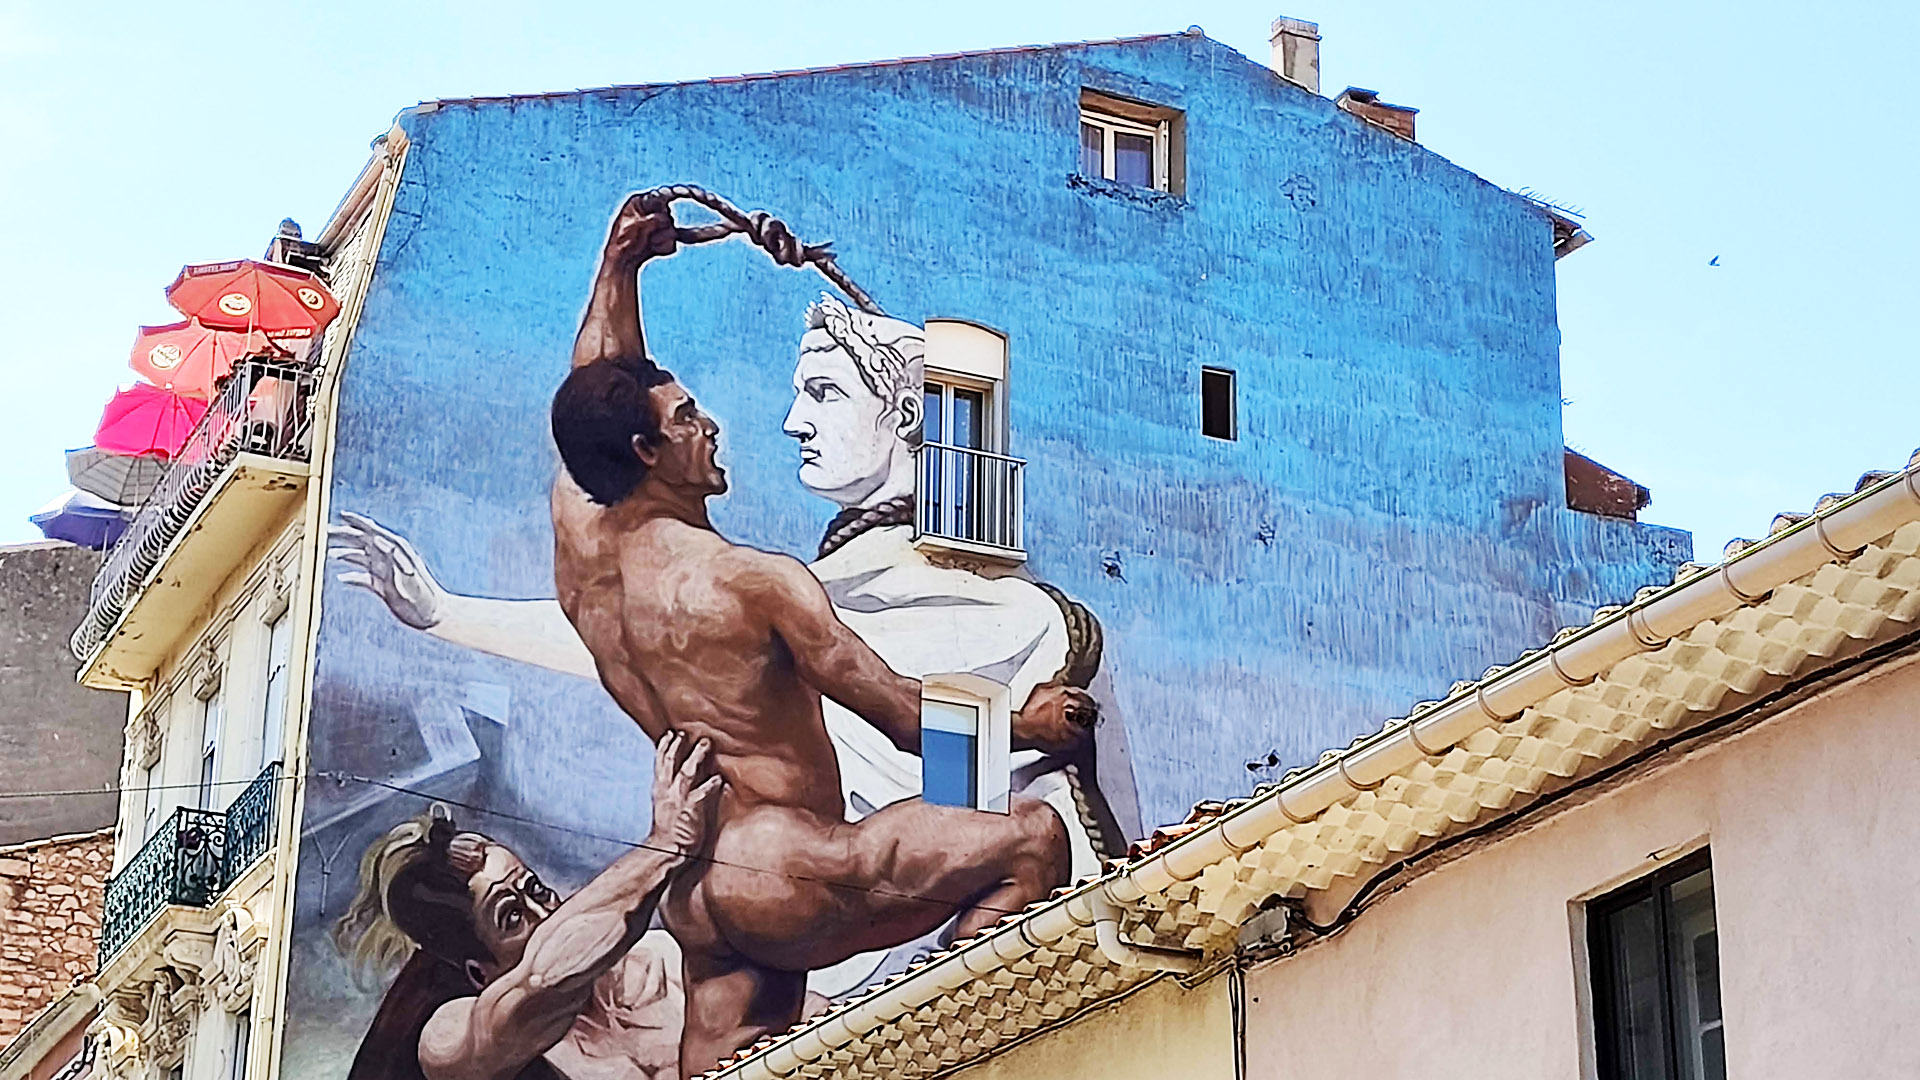 Oeuvre de Street-Art du MaCO de Sète